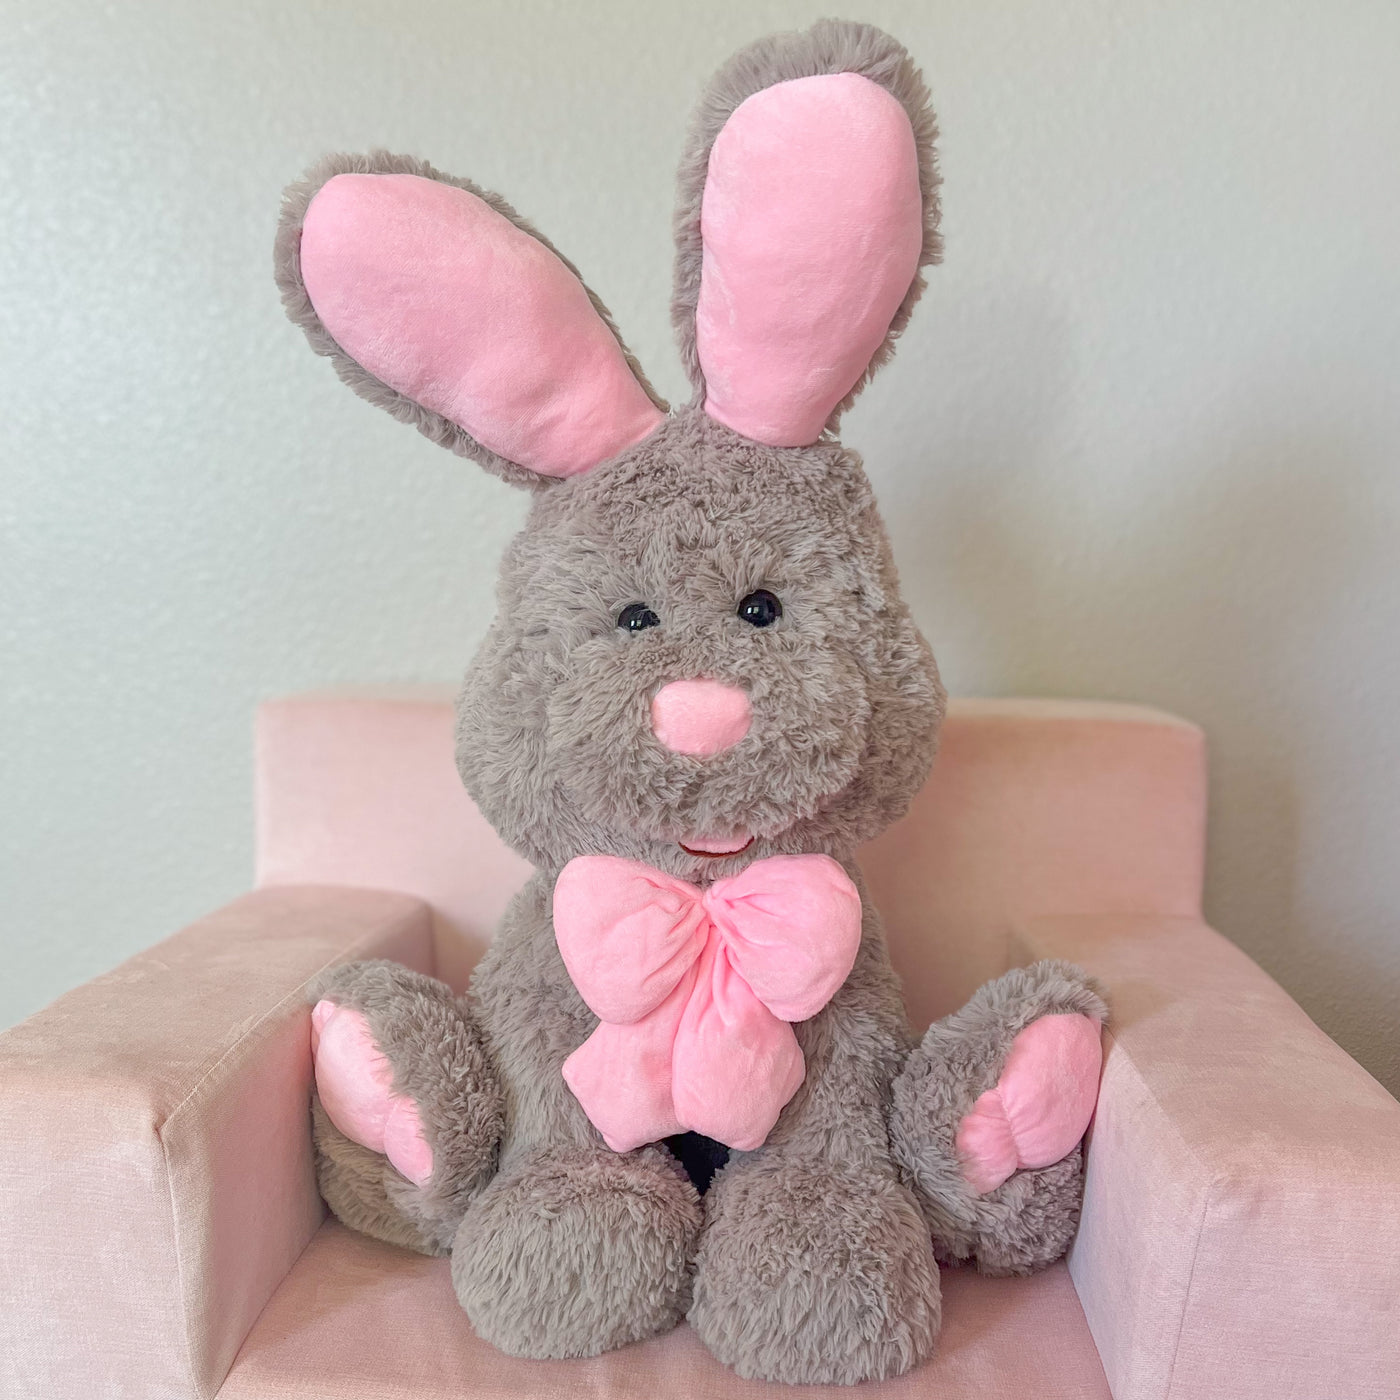 Big Bunny Plush Toy, Grey, 31.5 Inches